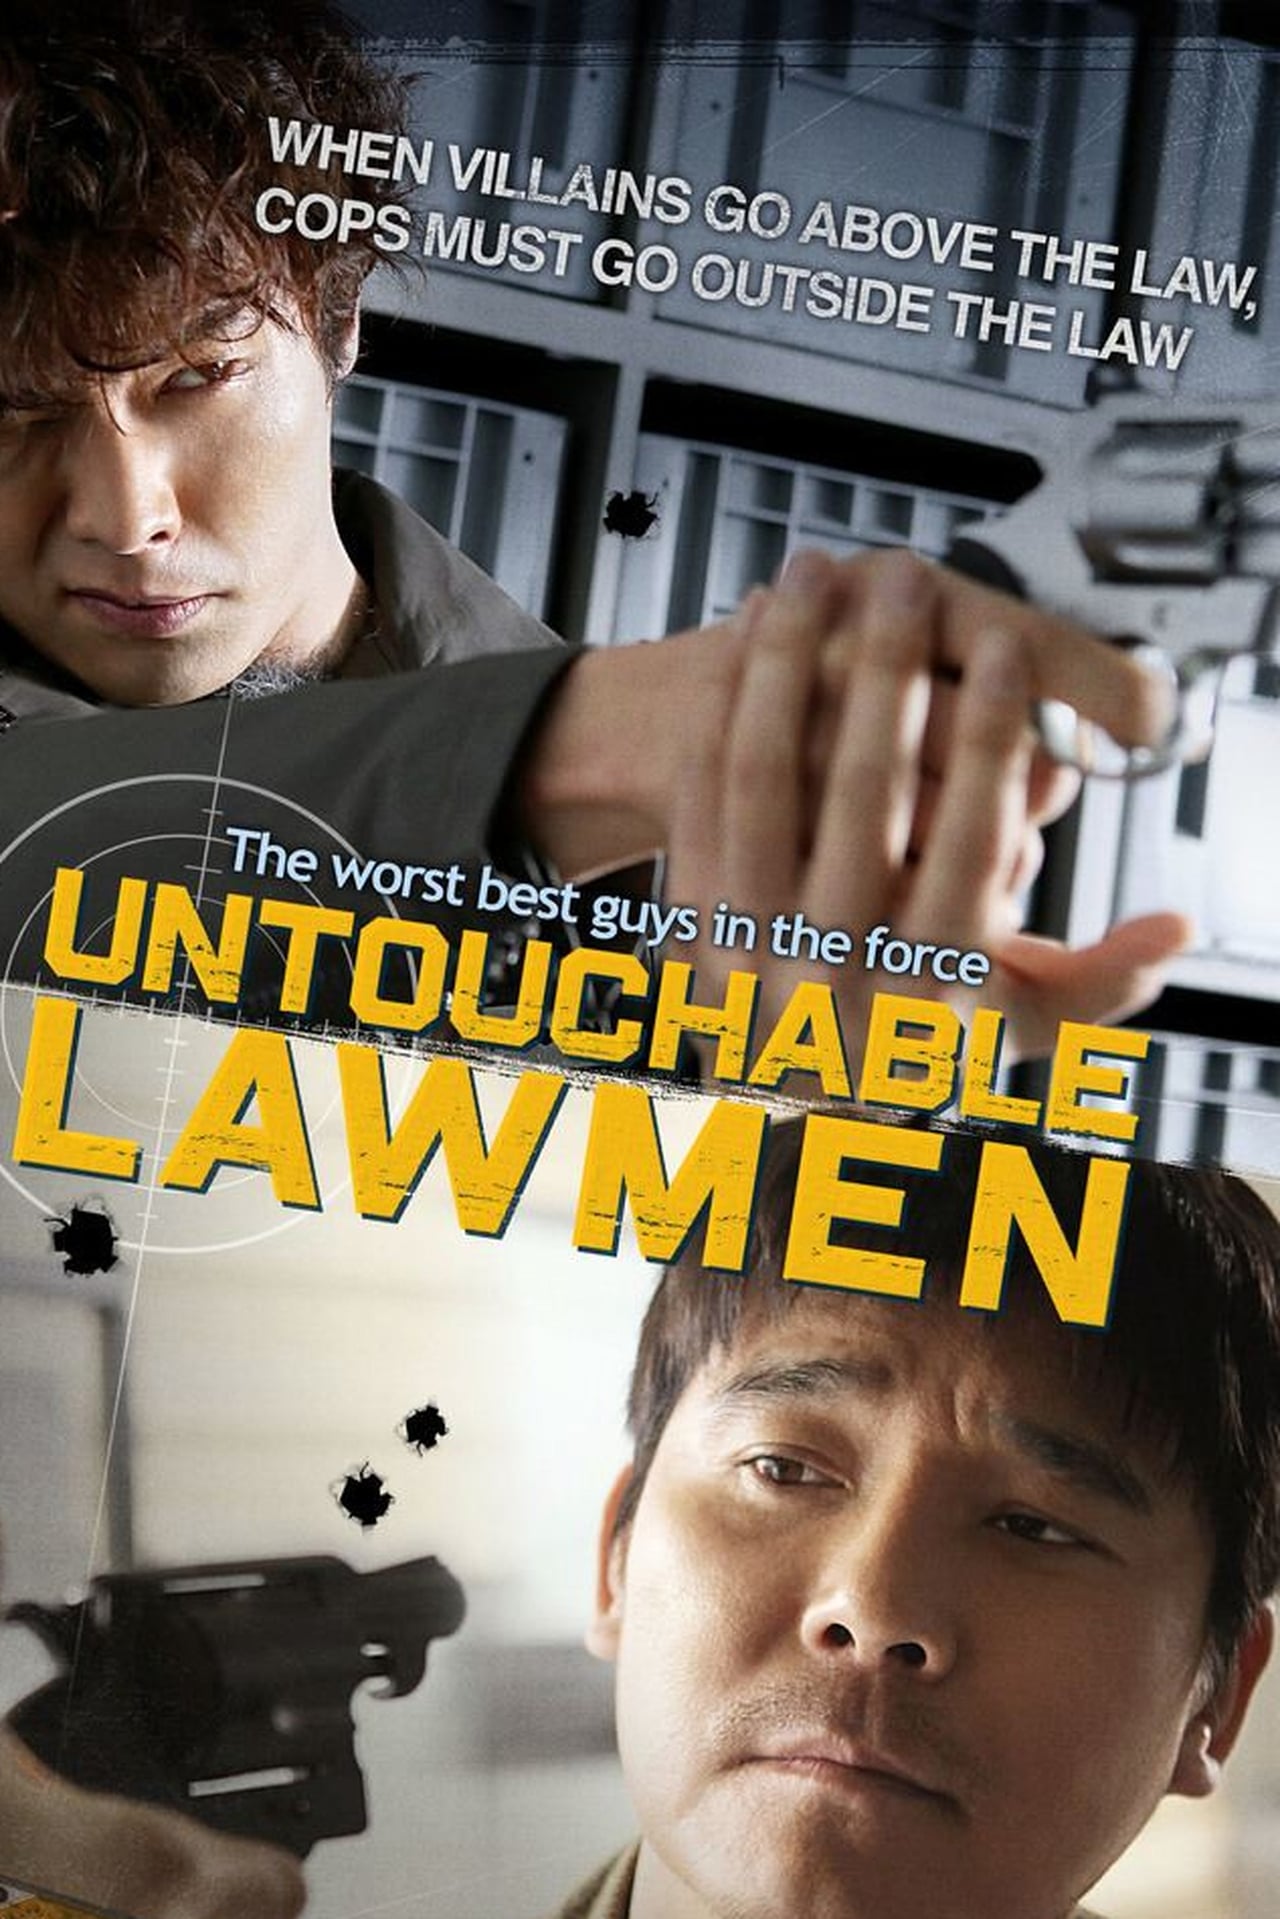 Untouchable Lawmen